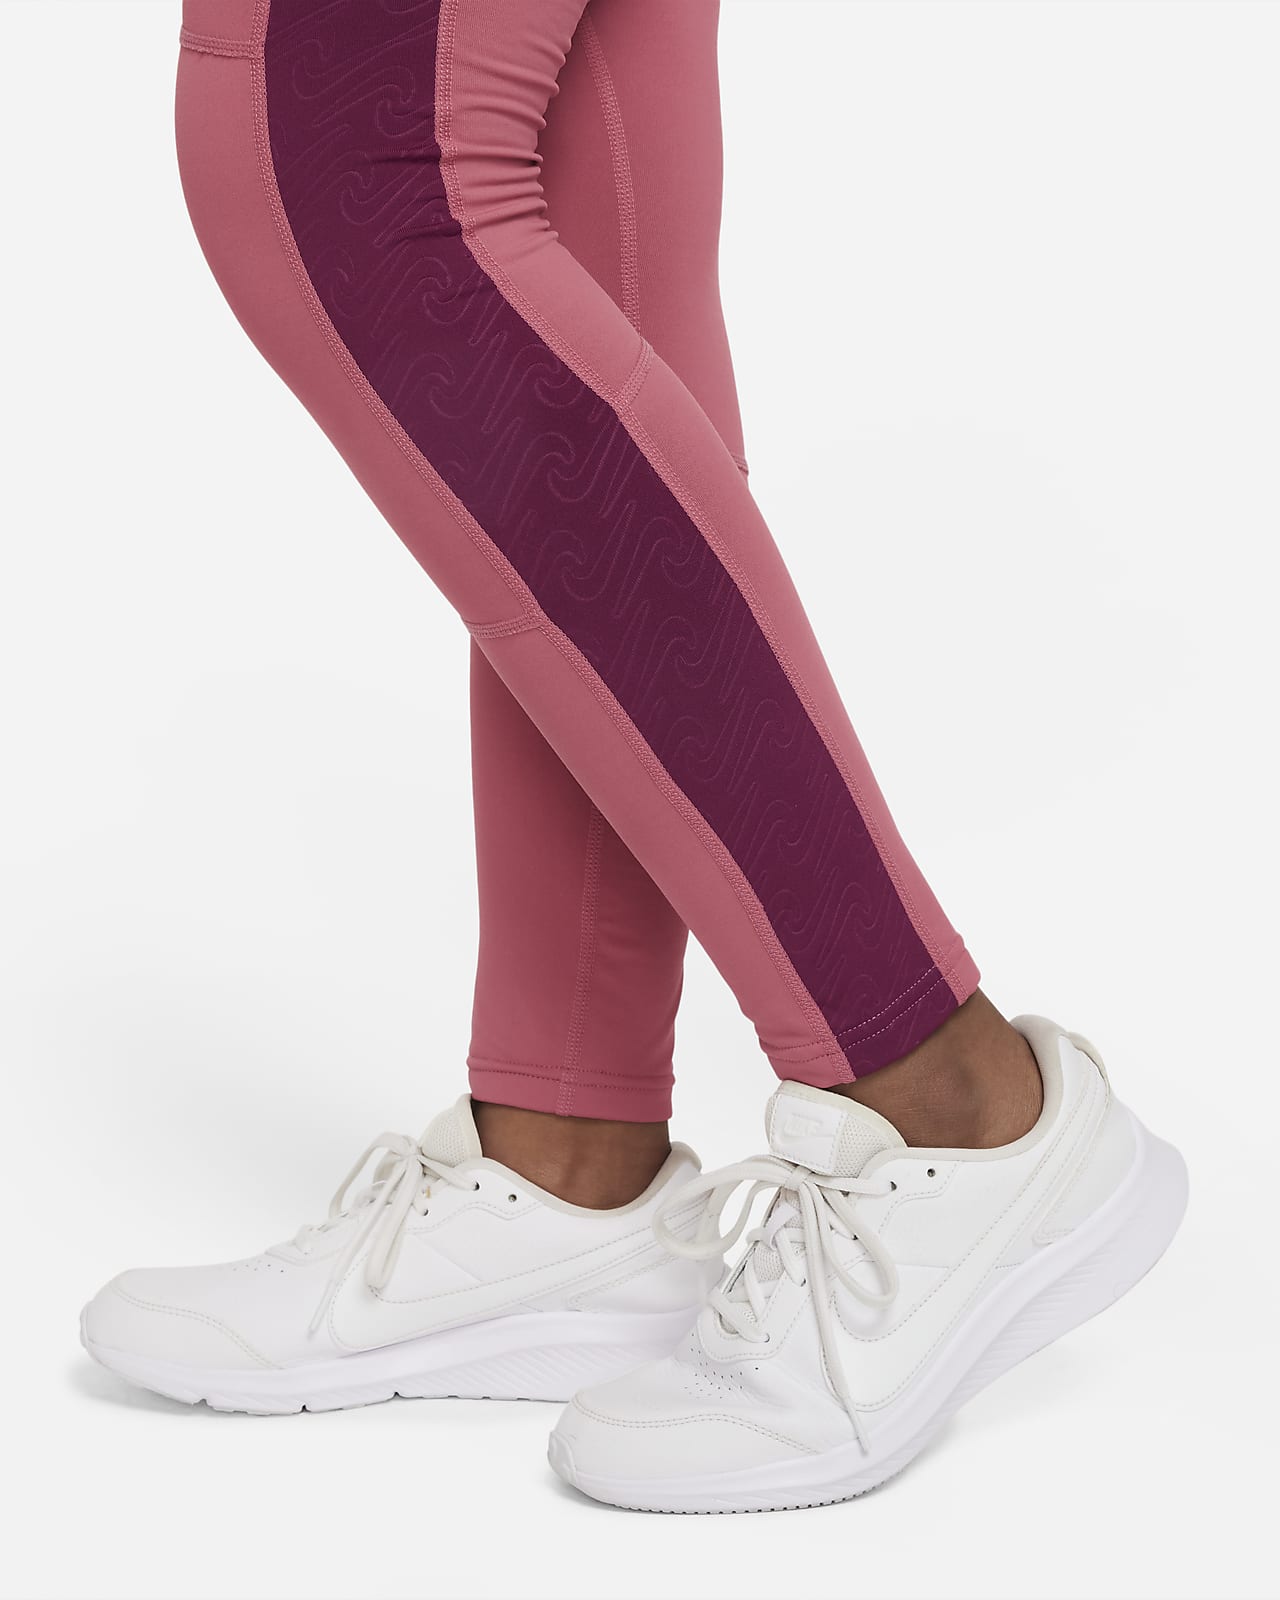 Nike Pro Warm Dri-FIT Big Kids' (Girls') Leggings (Extended Size).